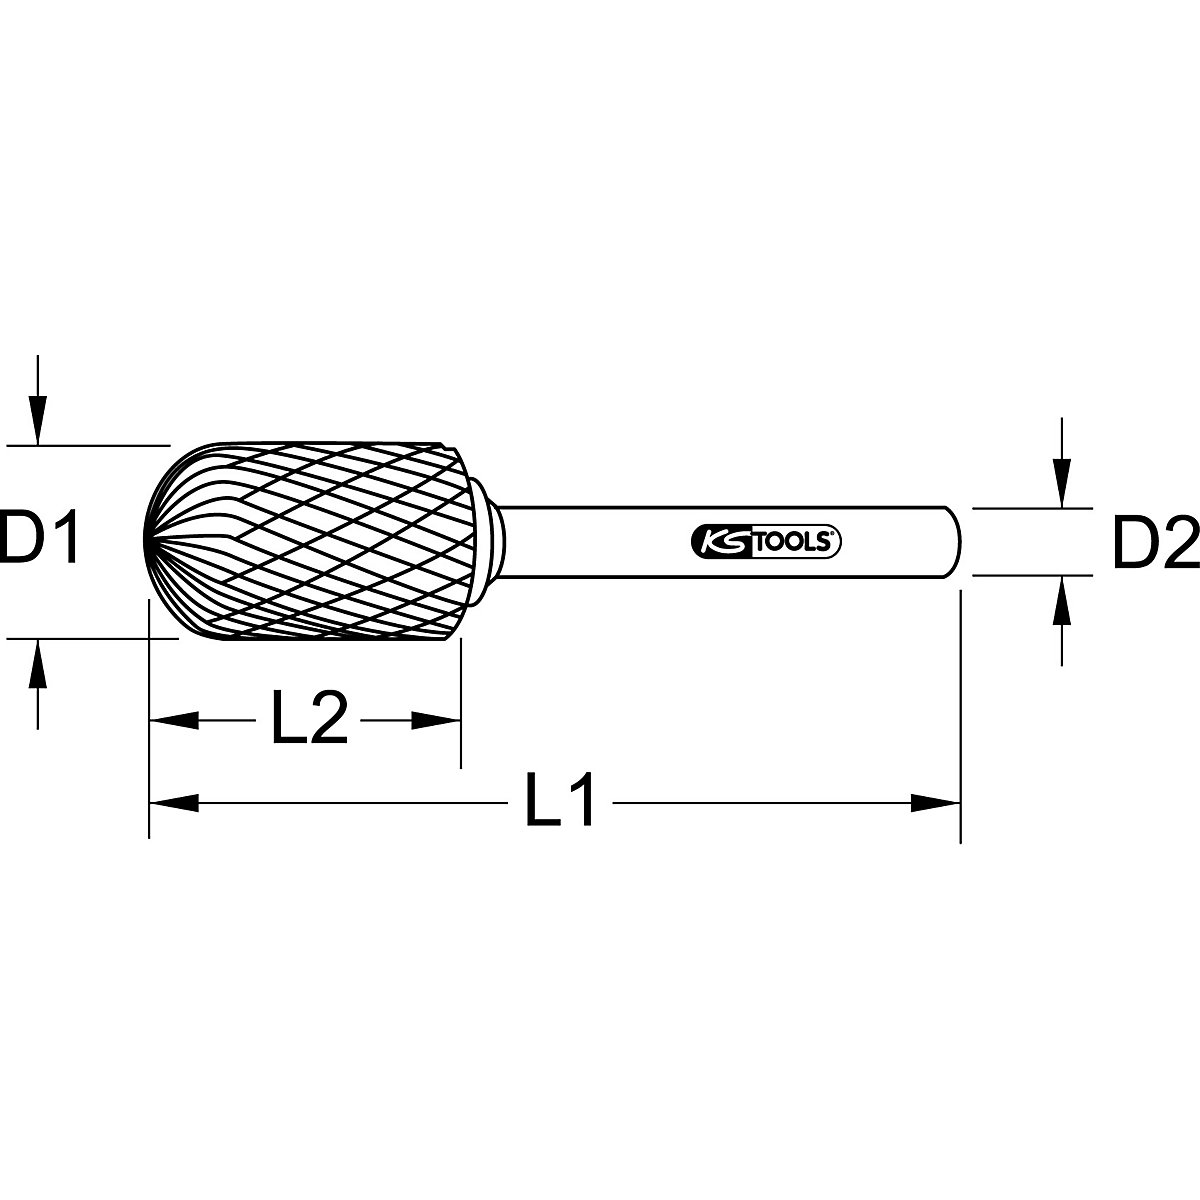 Lixa rotativa cilíndrica HM, forma C – KS Tools